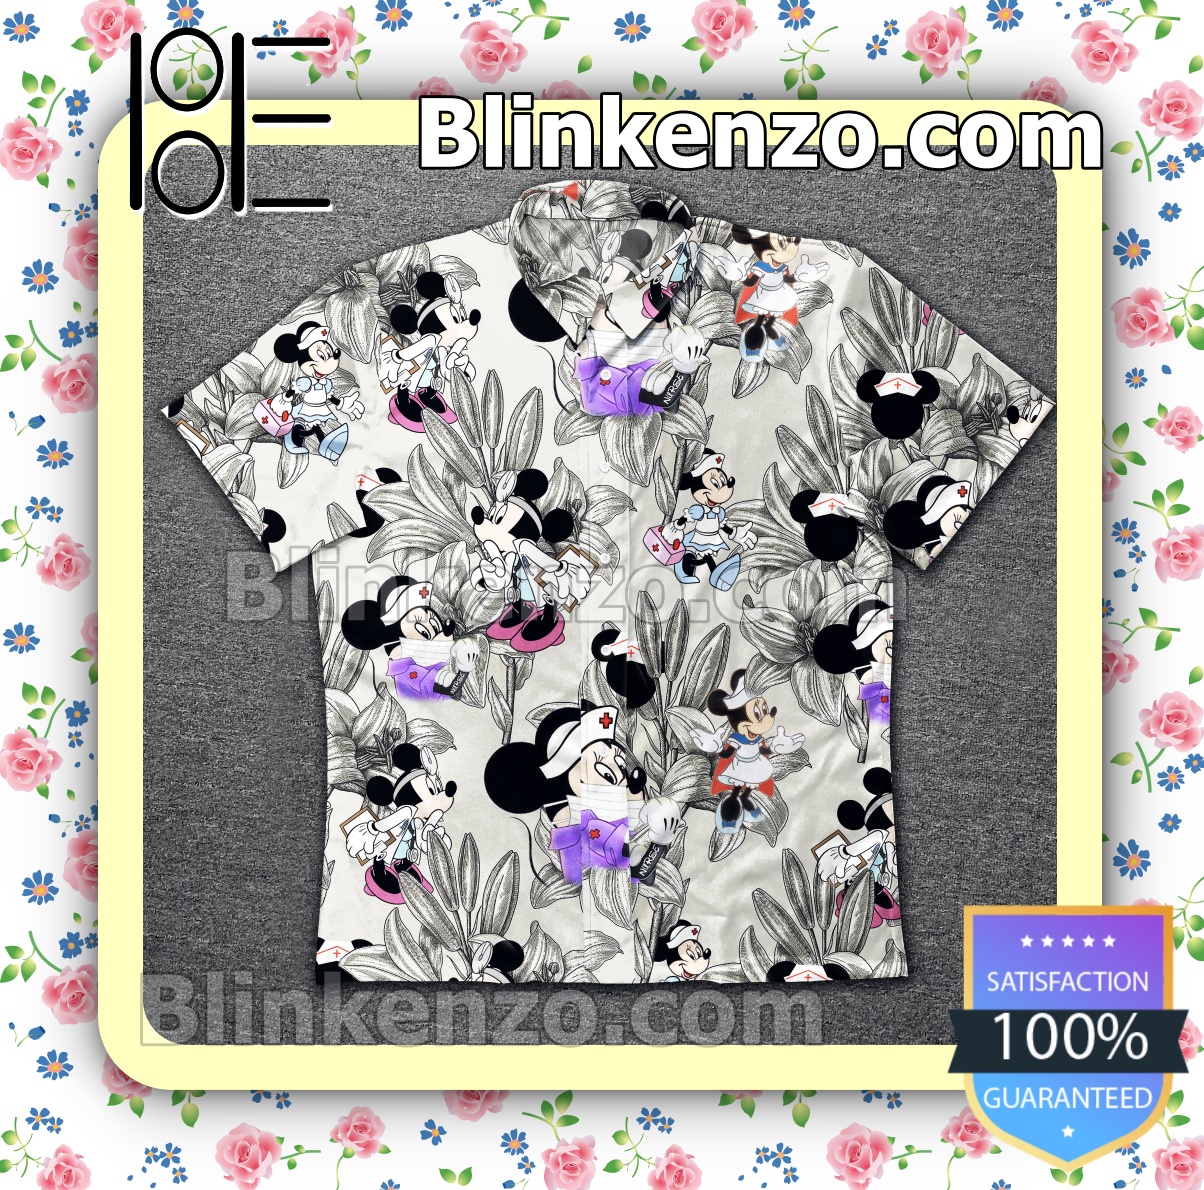 Sale Off Mickey Nurse Lily Flower White Summer Shirts